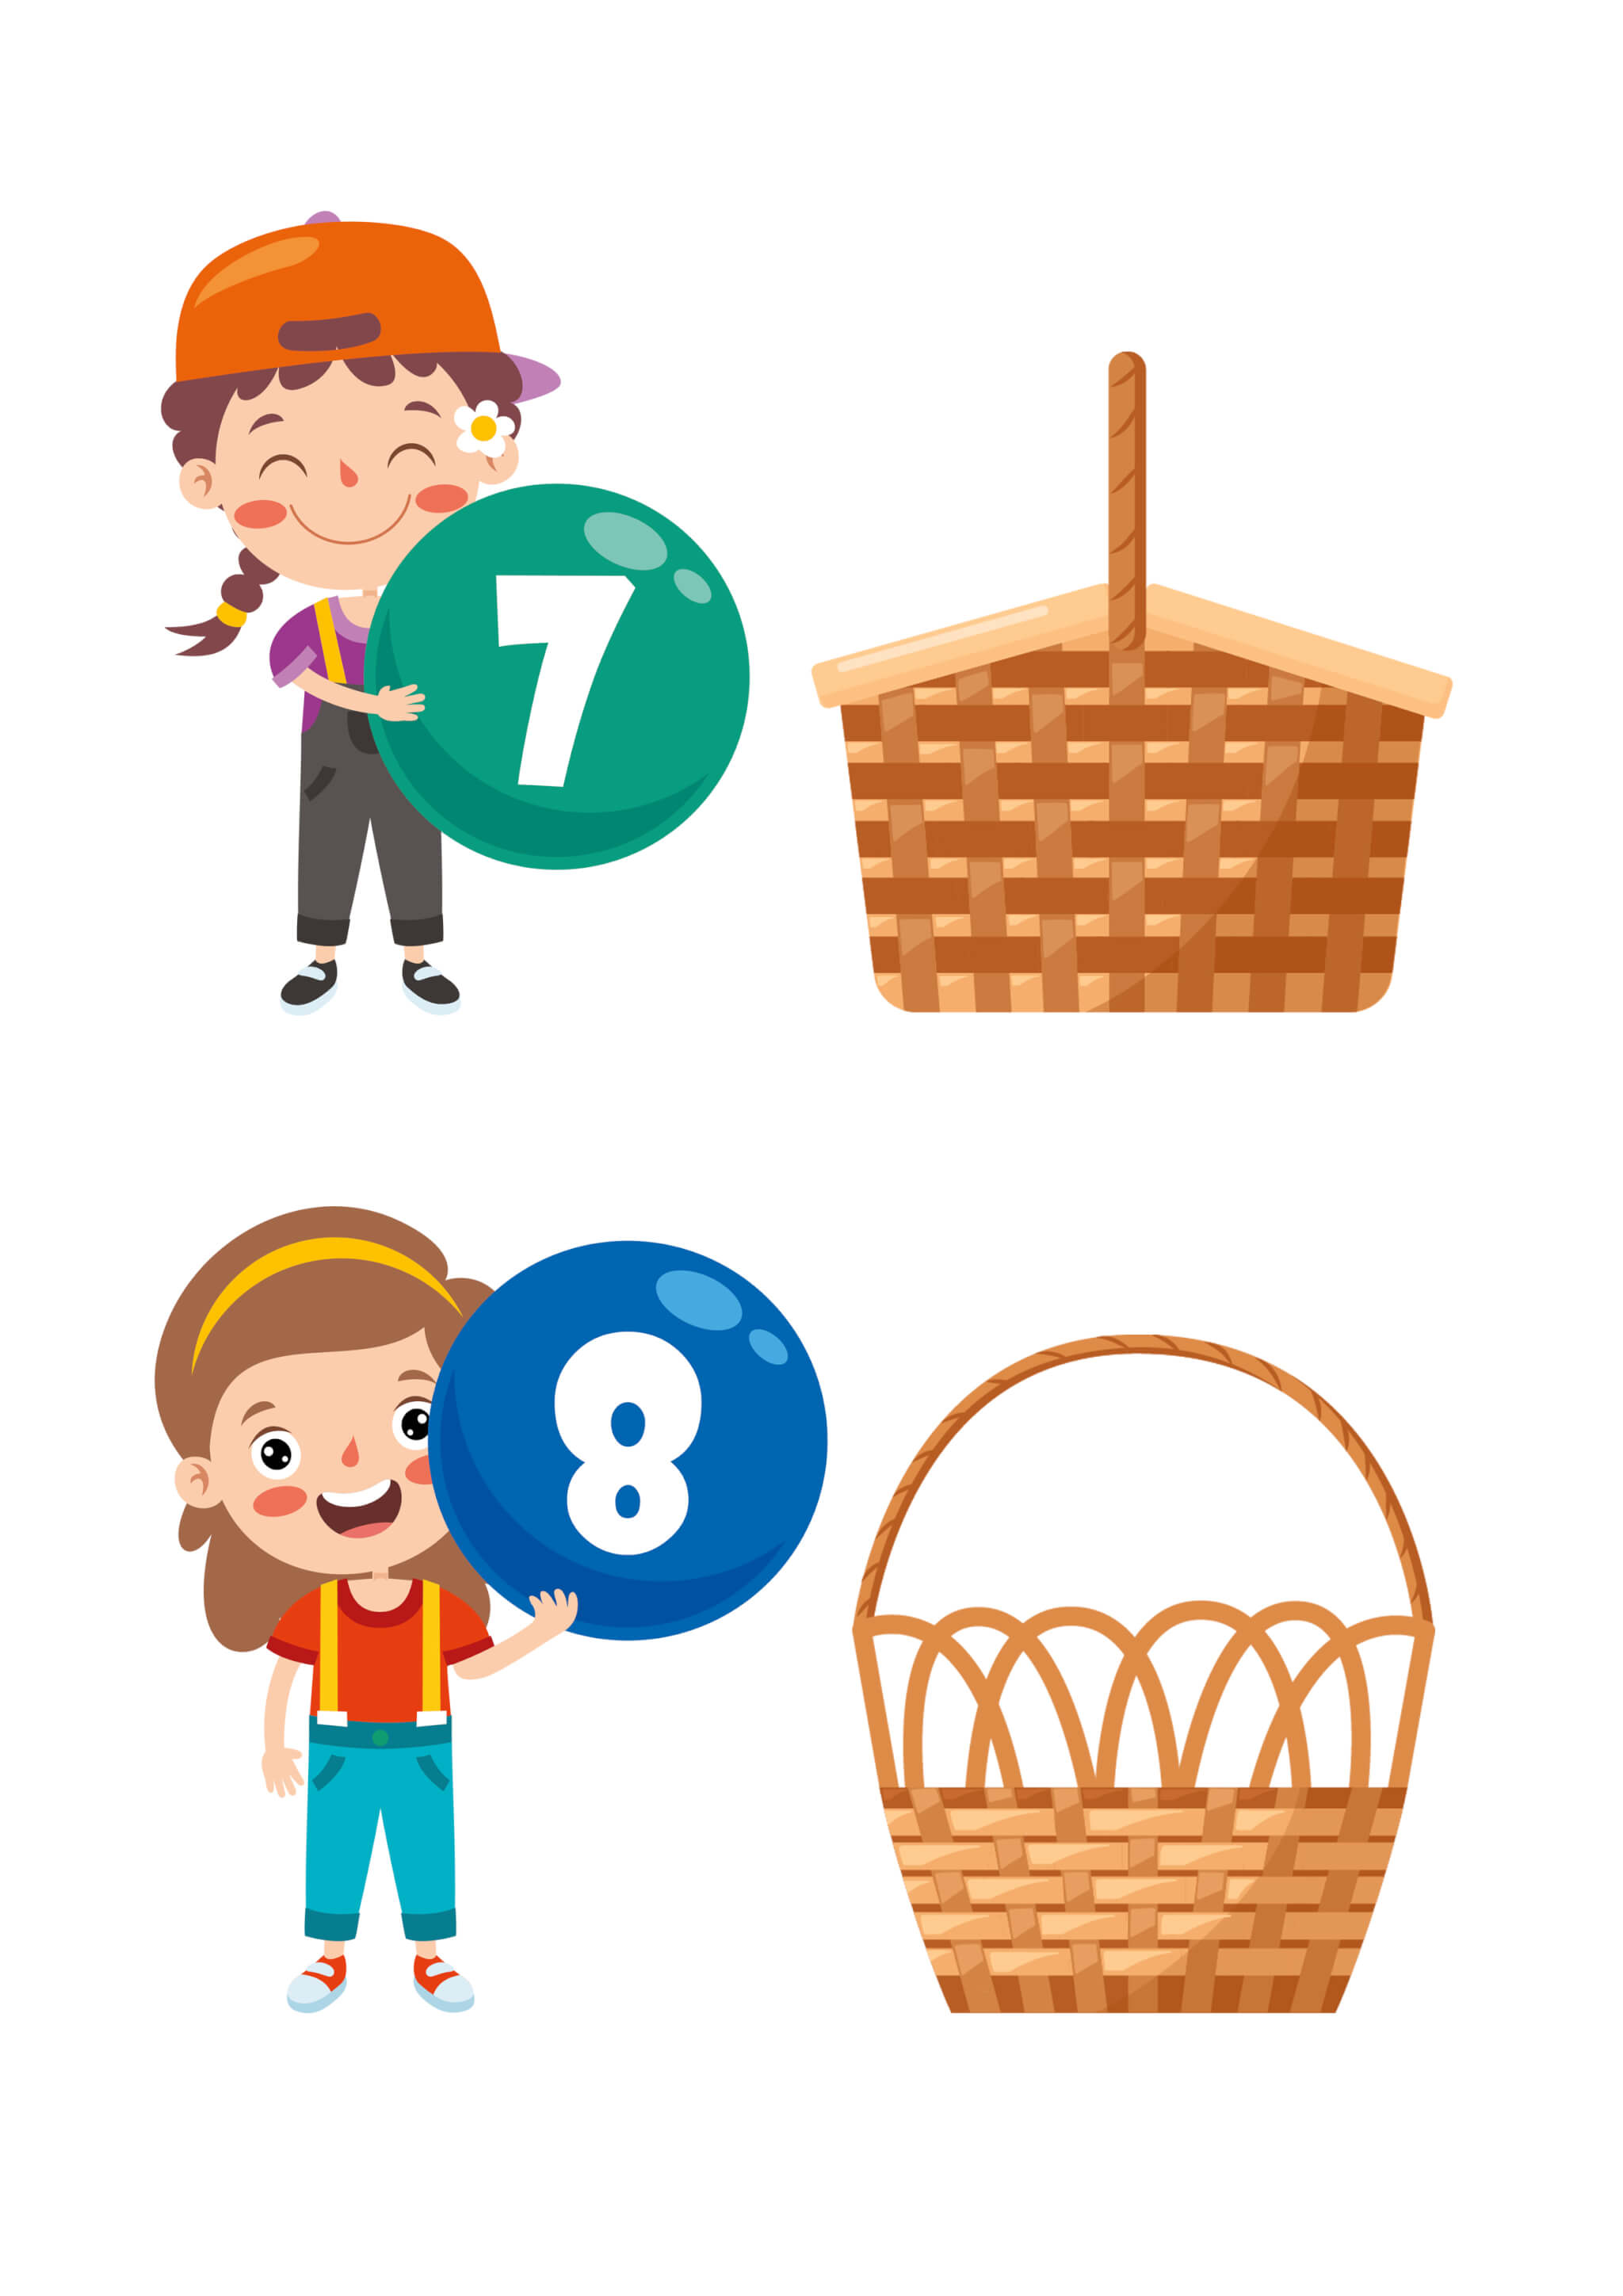 Baskets Math Printable for Counting - Image 5